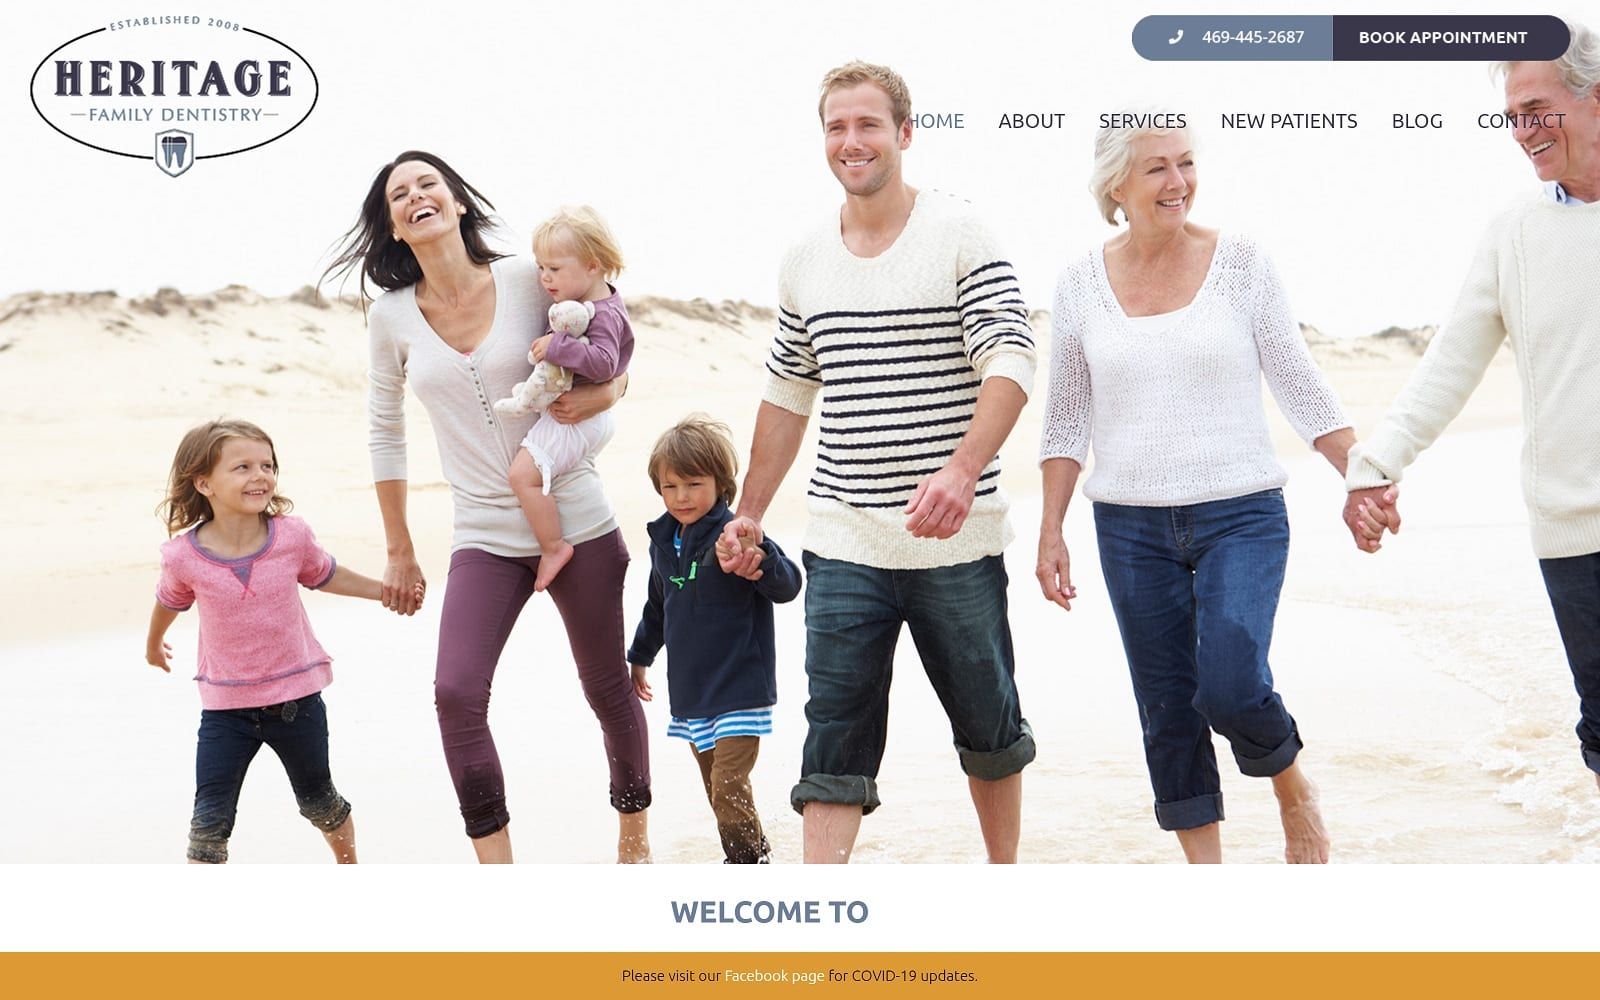 The screenshot of heritage family dentistry yourheritagefamilydentistry. Com website